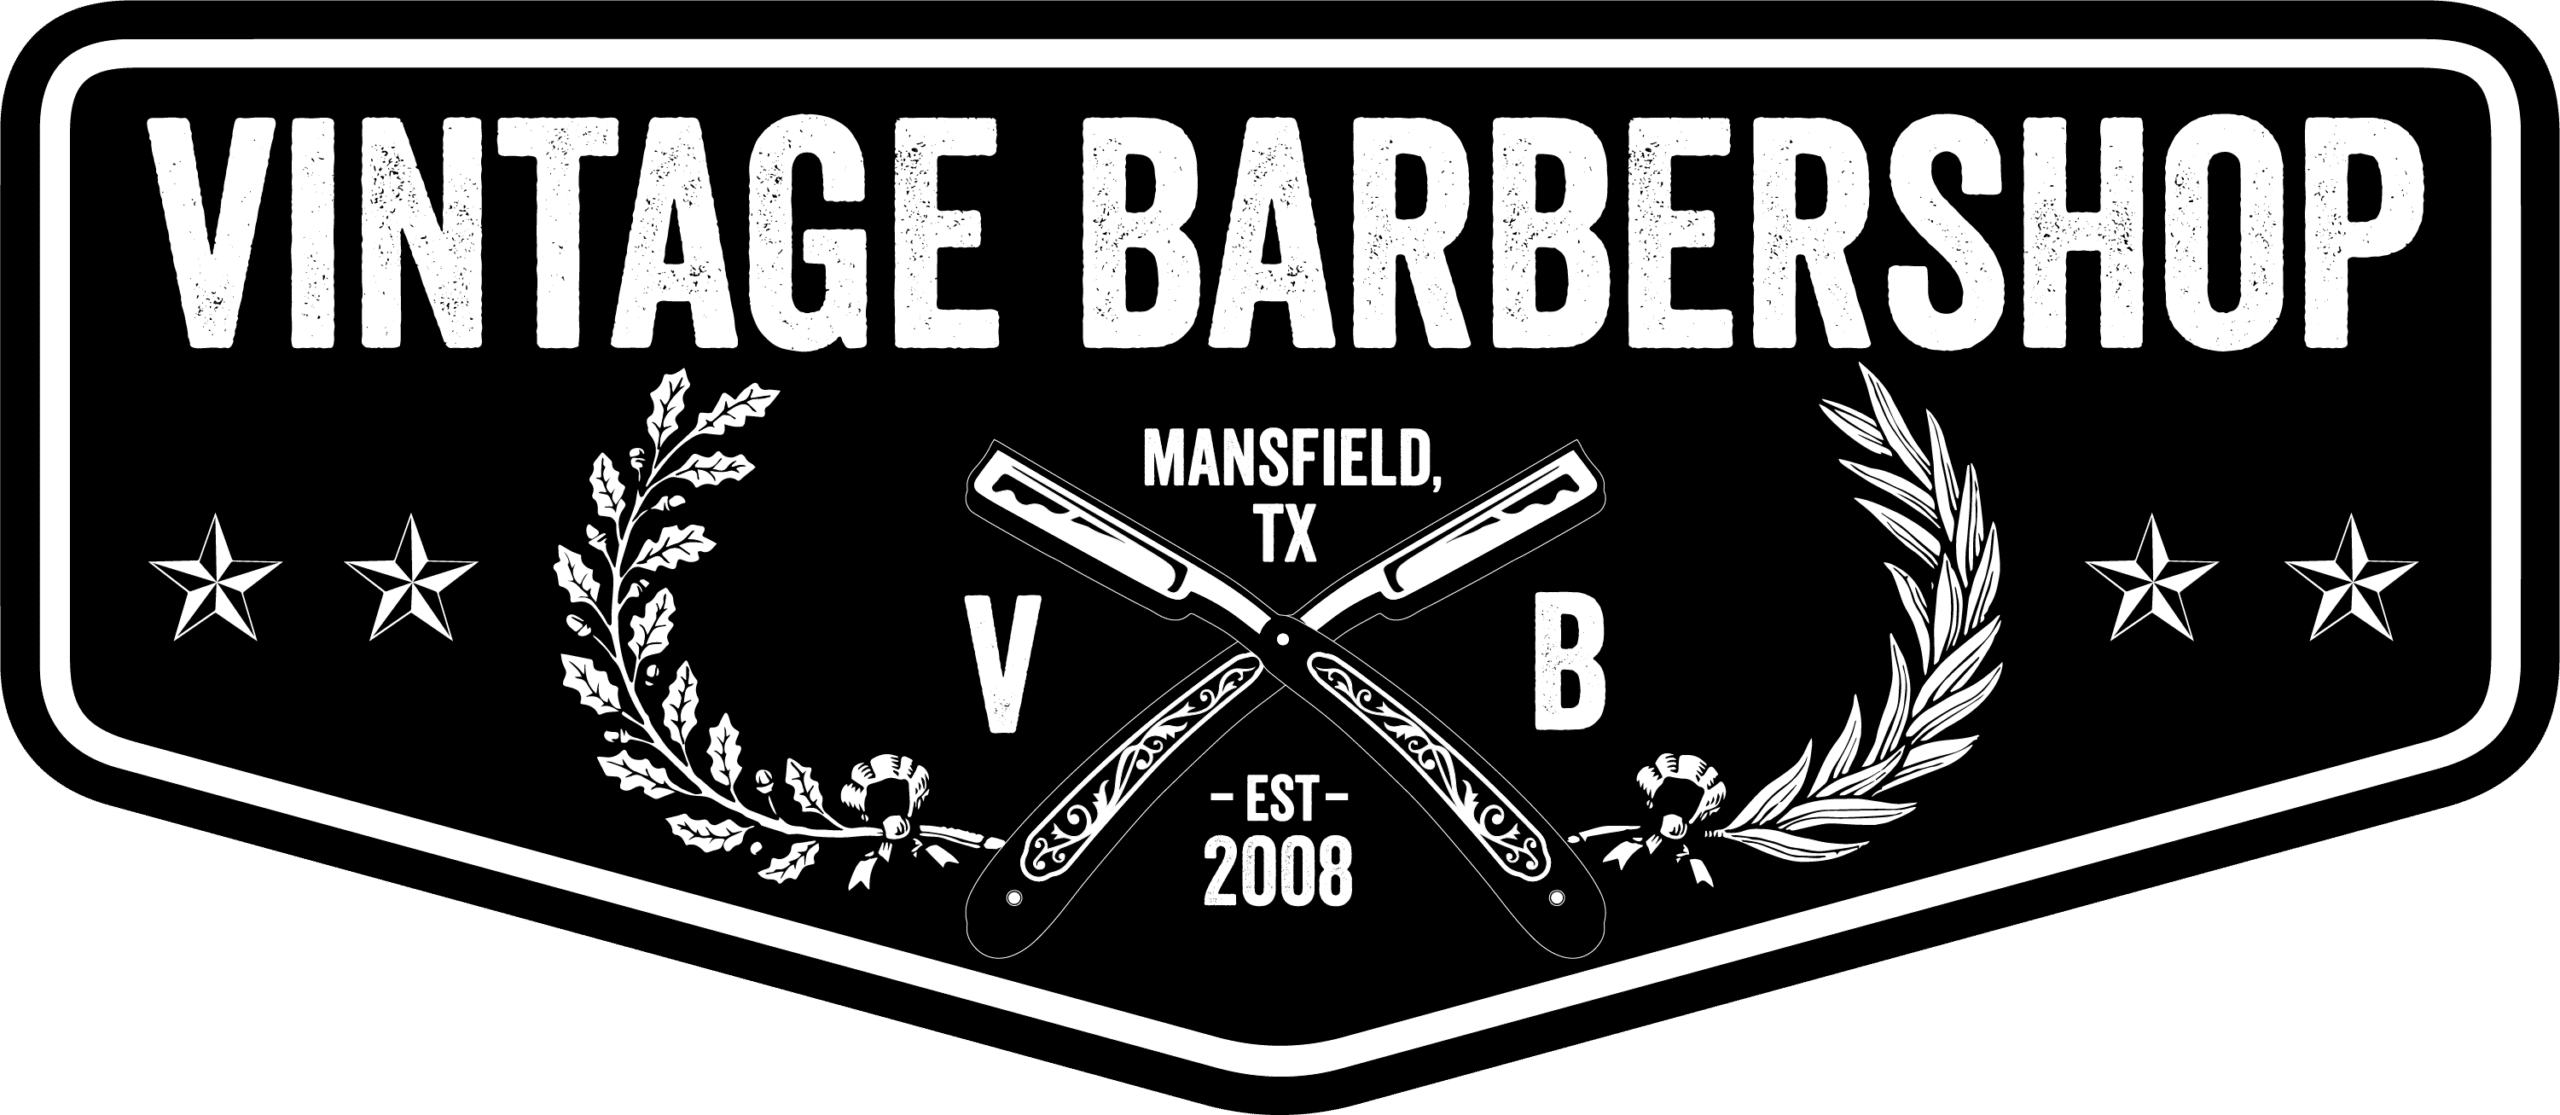 vintage barbershop logo